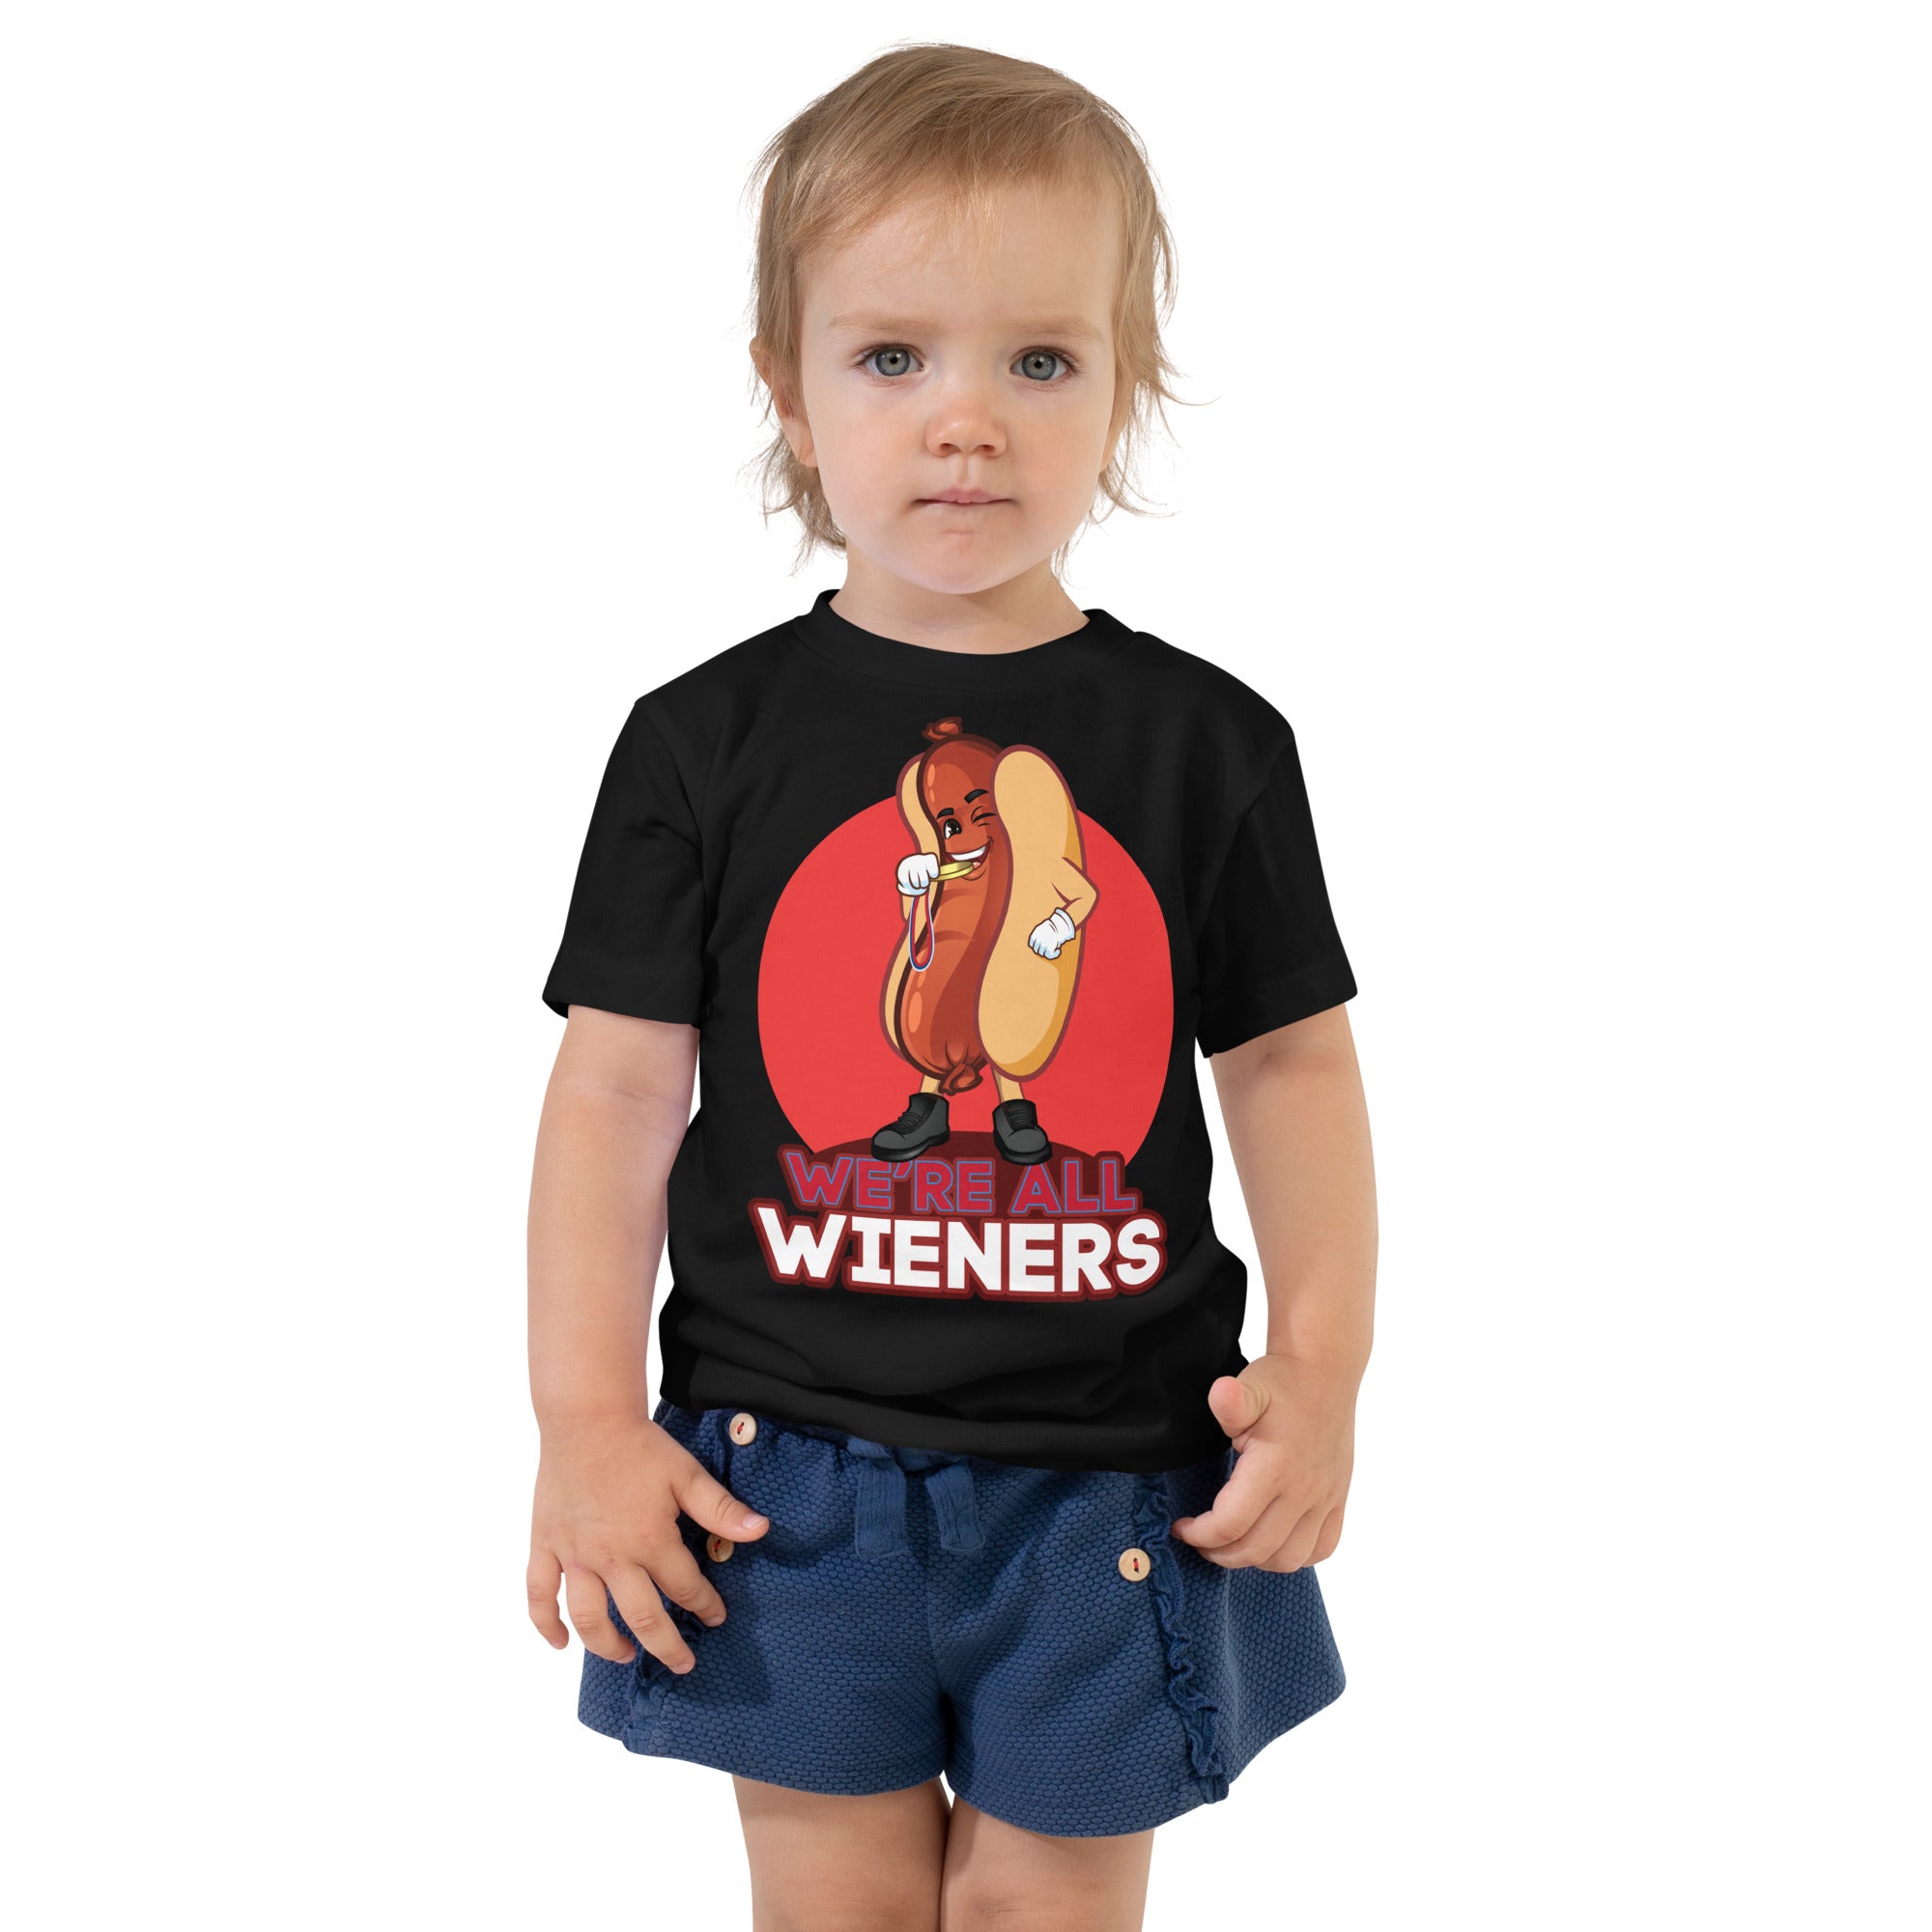 We're All Wieners - Toddler Short Sleeve Tee - Red